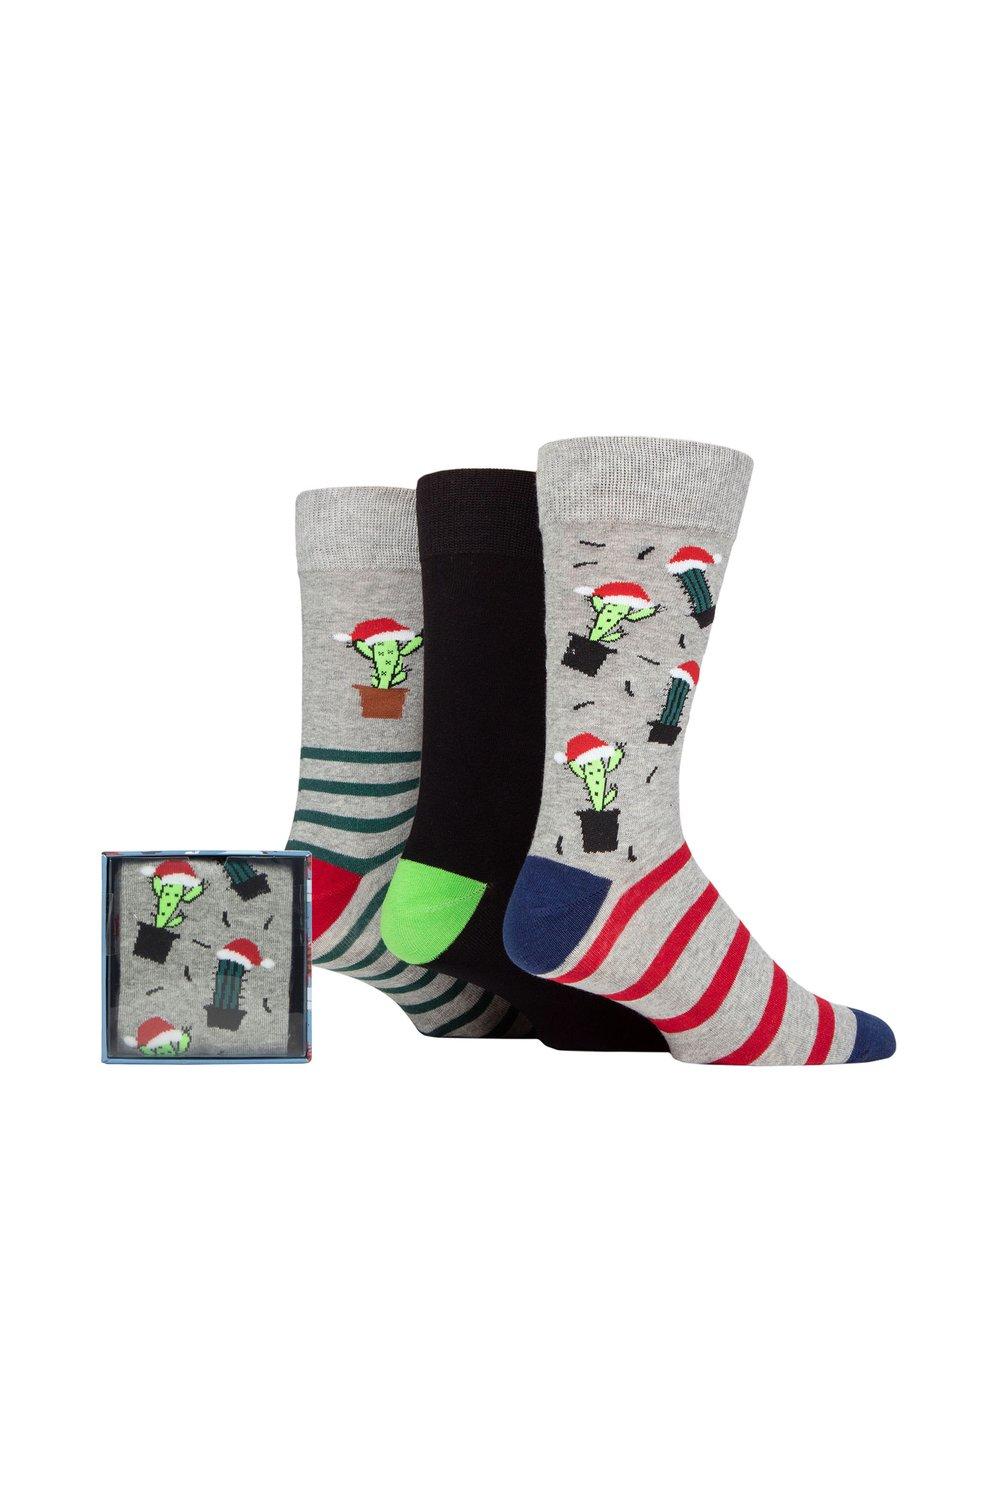 wheatley abigail christmas wonderland to colour 3 пары носков в подарочной упаковке Winter Wonderland Christmas Cube SOCKSHOP Wild Feet, зеленый